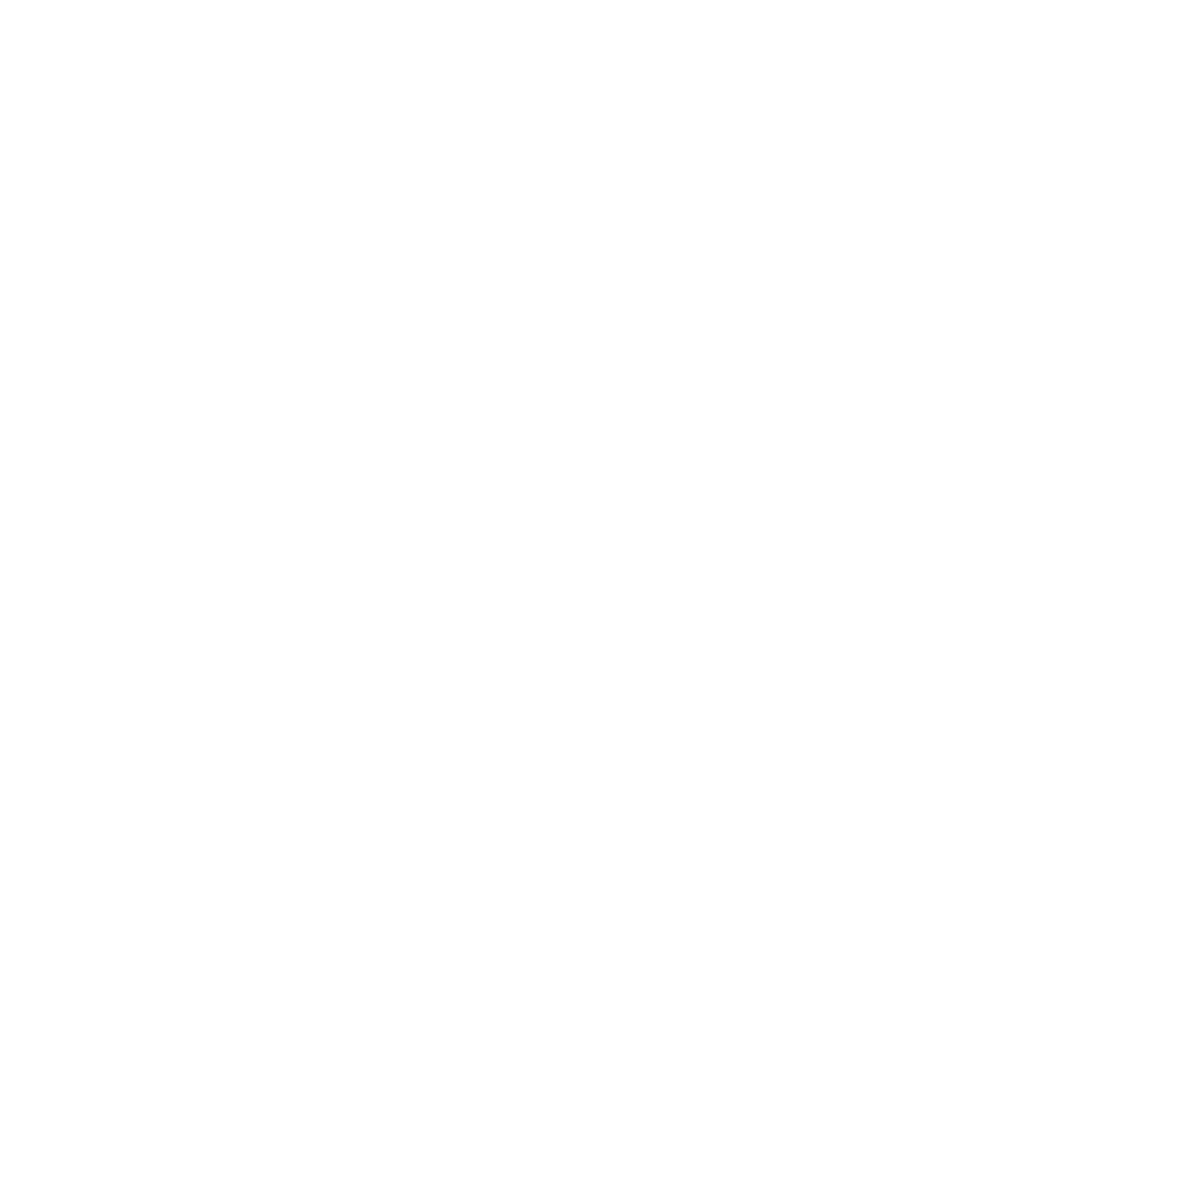 InRevit.com